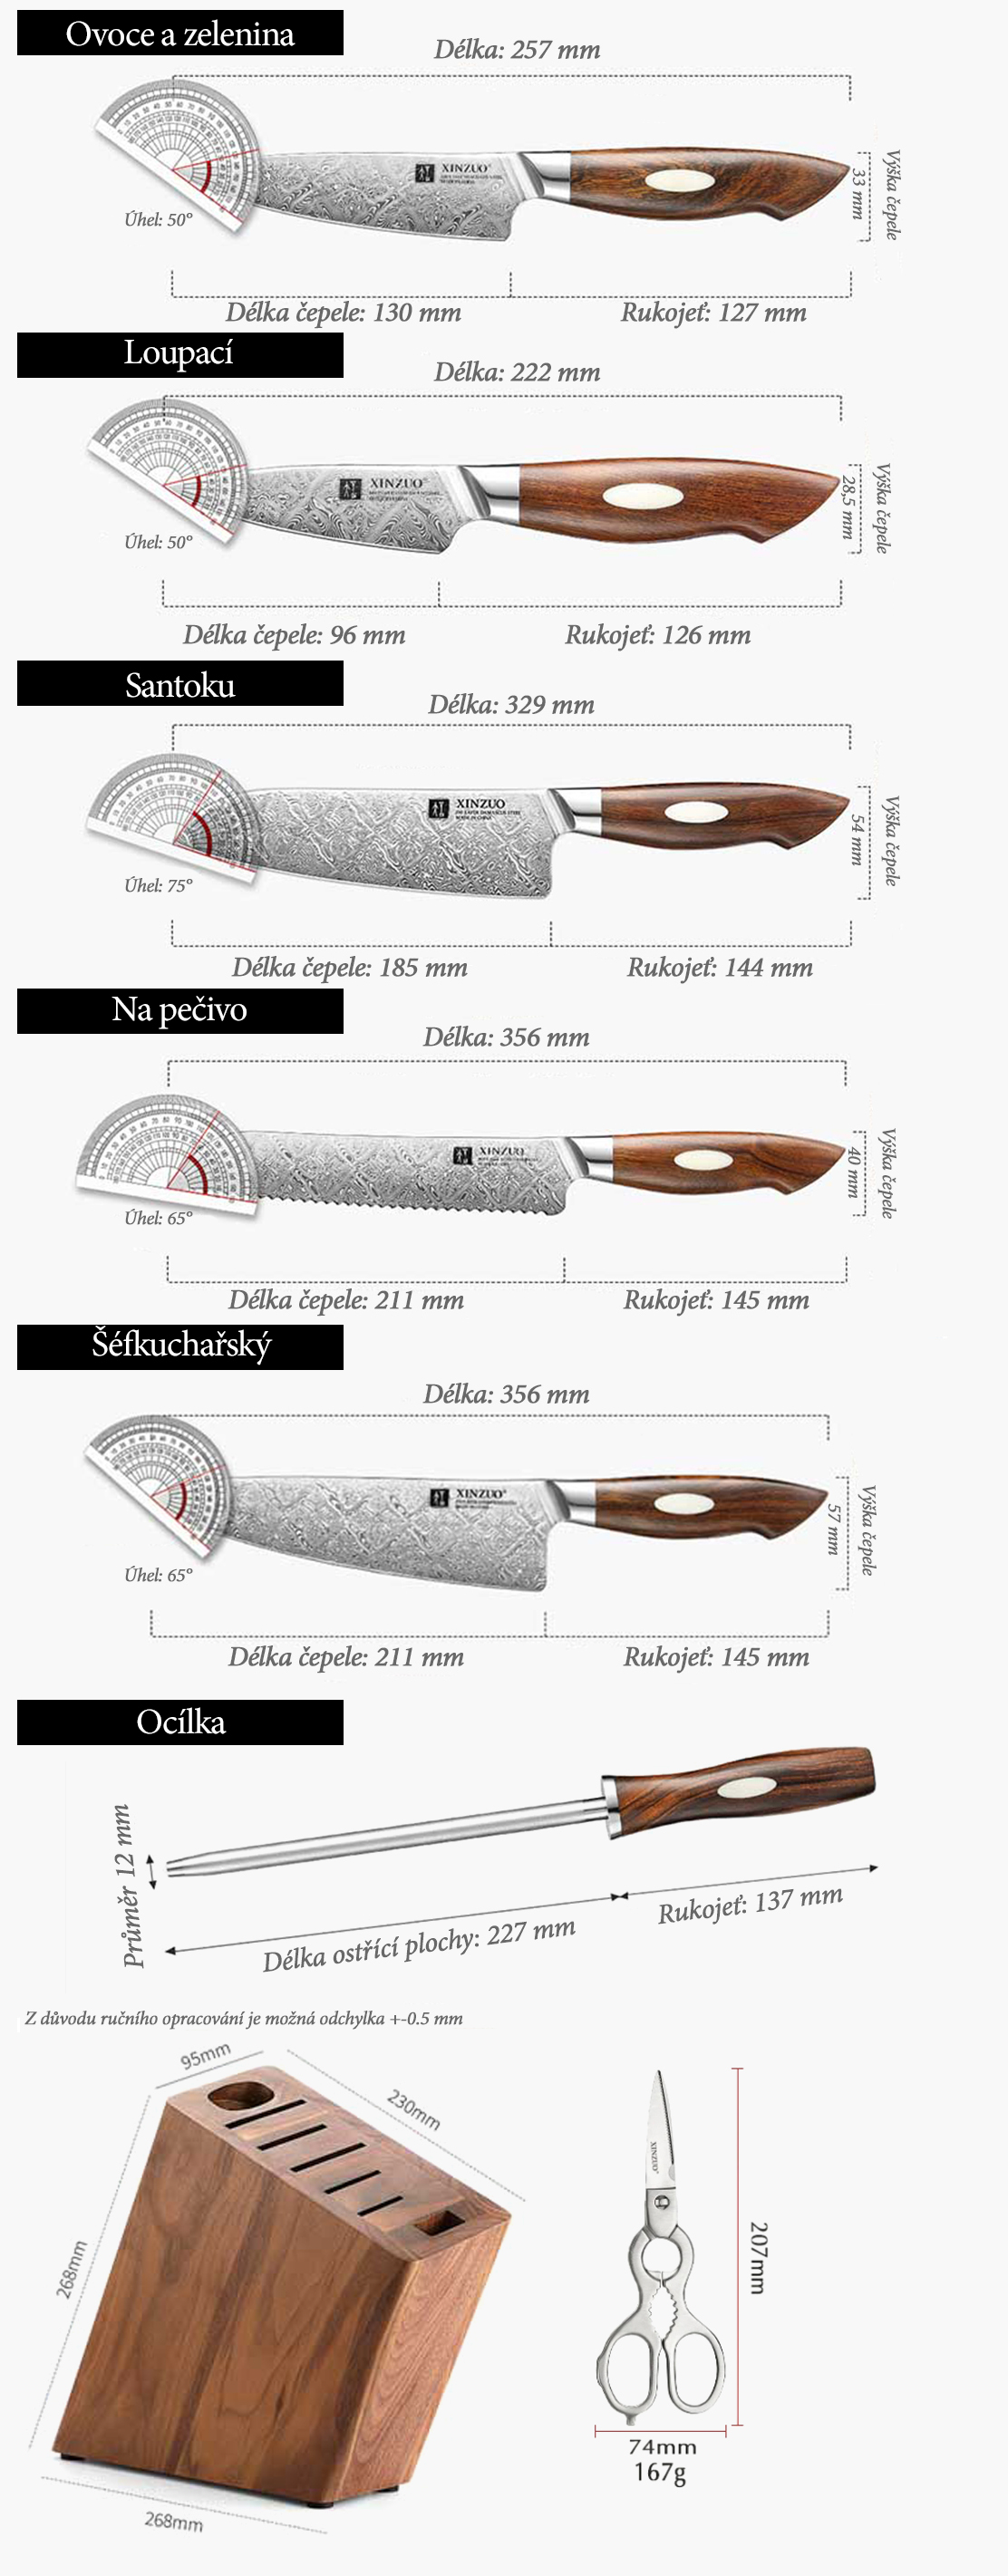 Obsah sady a rozměry nožů